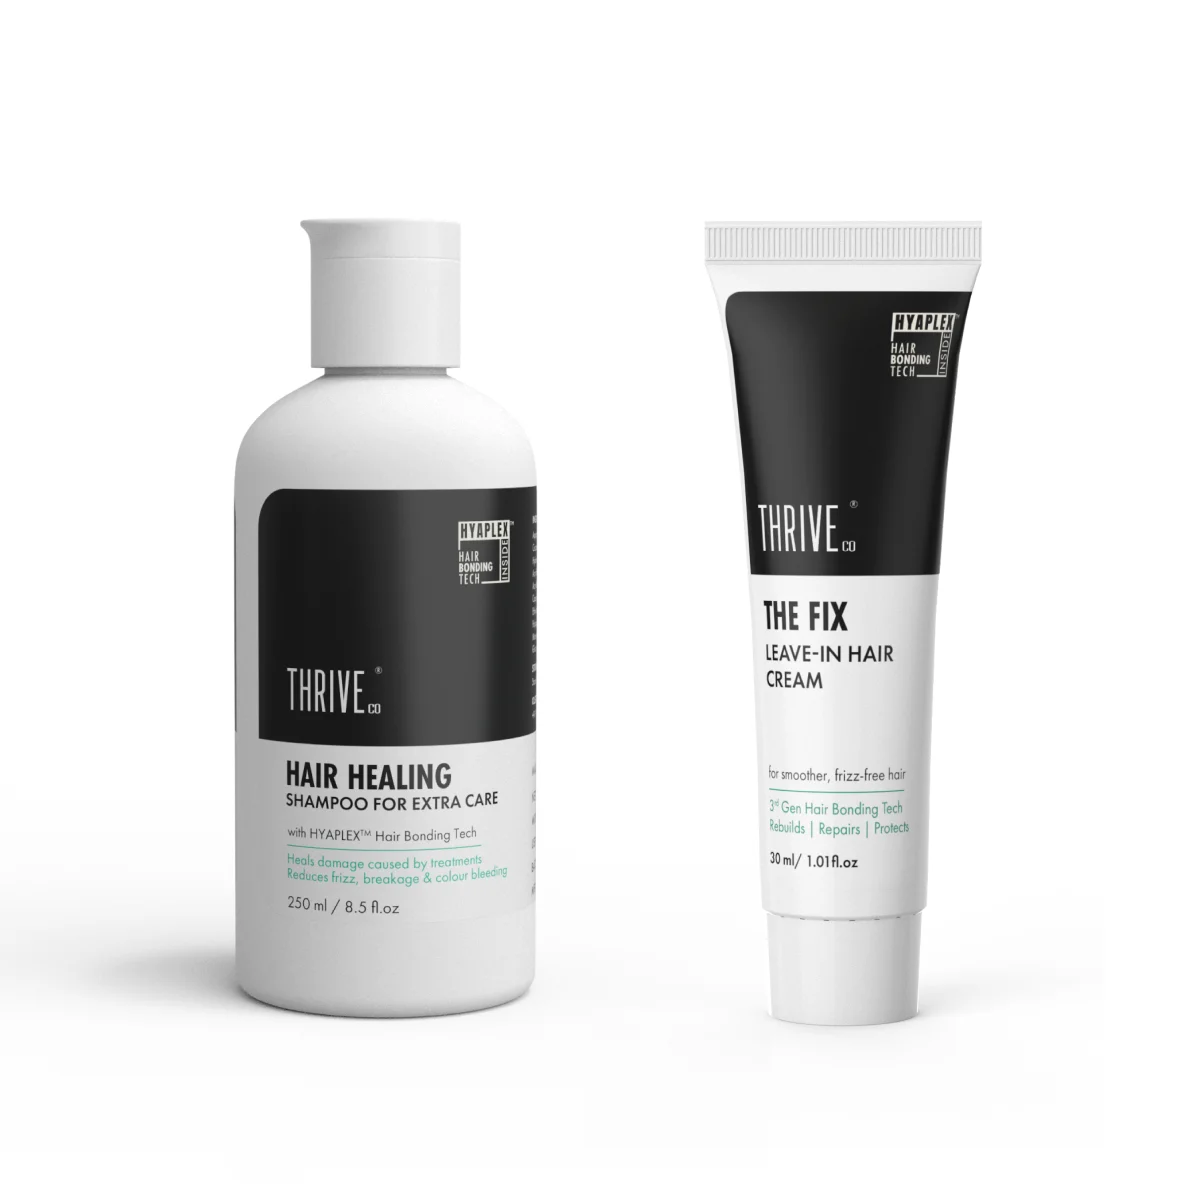 Hair Healing Shampoo (250ml) + The Fix (30ml) Combo